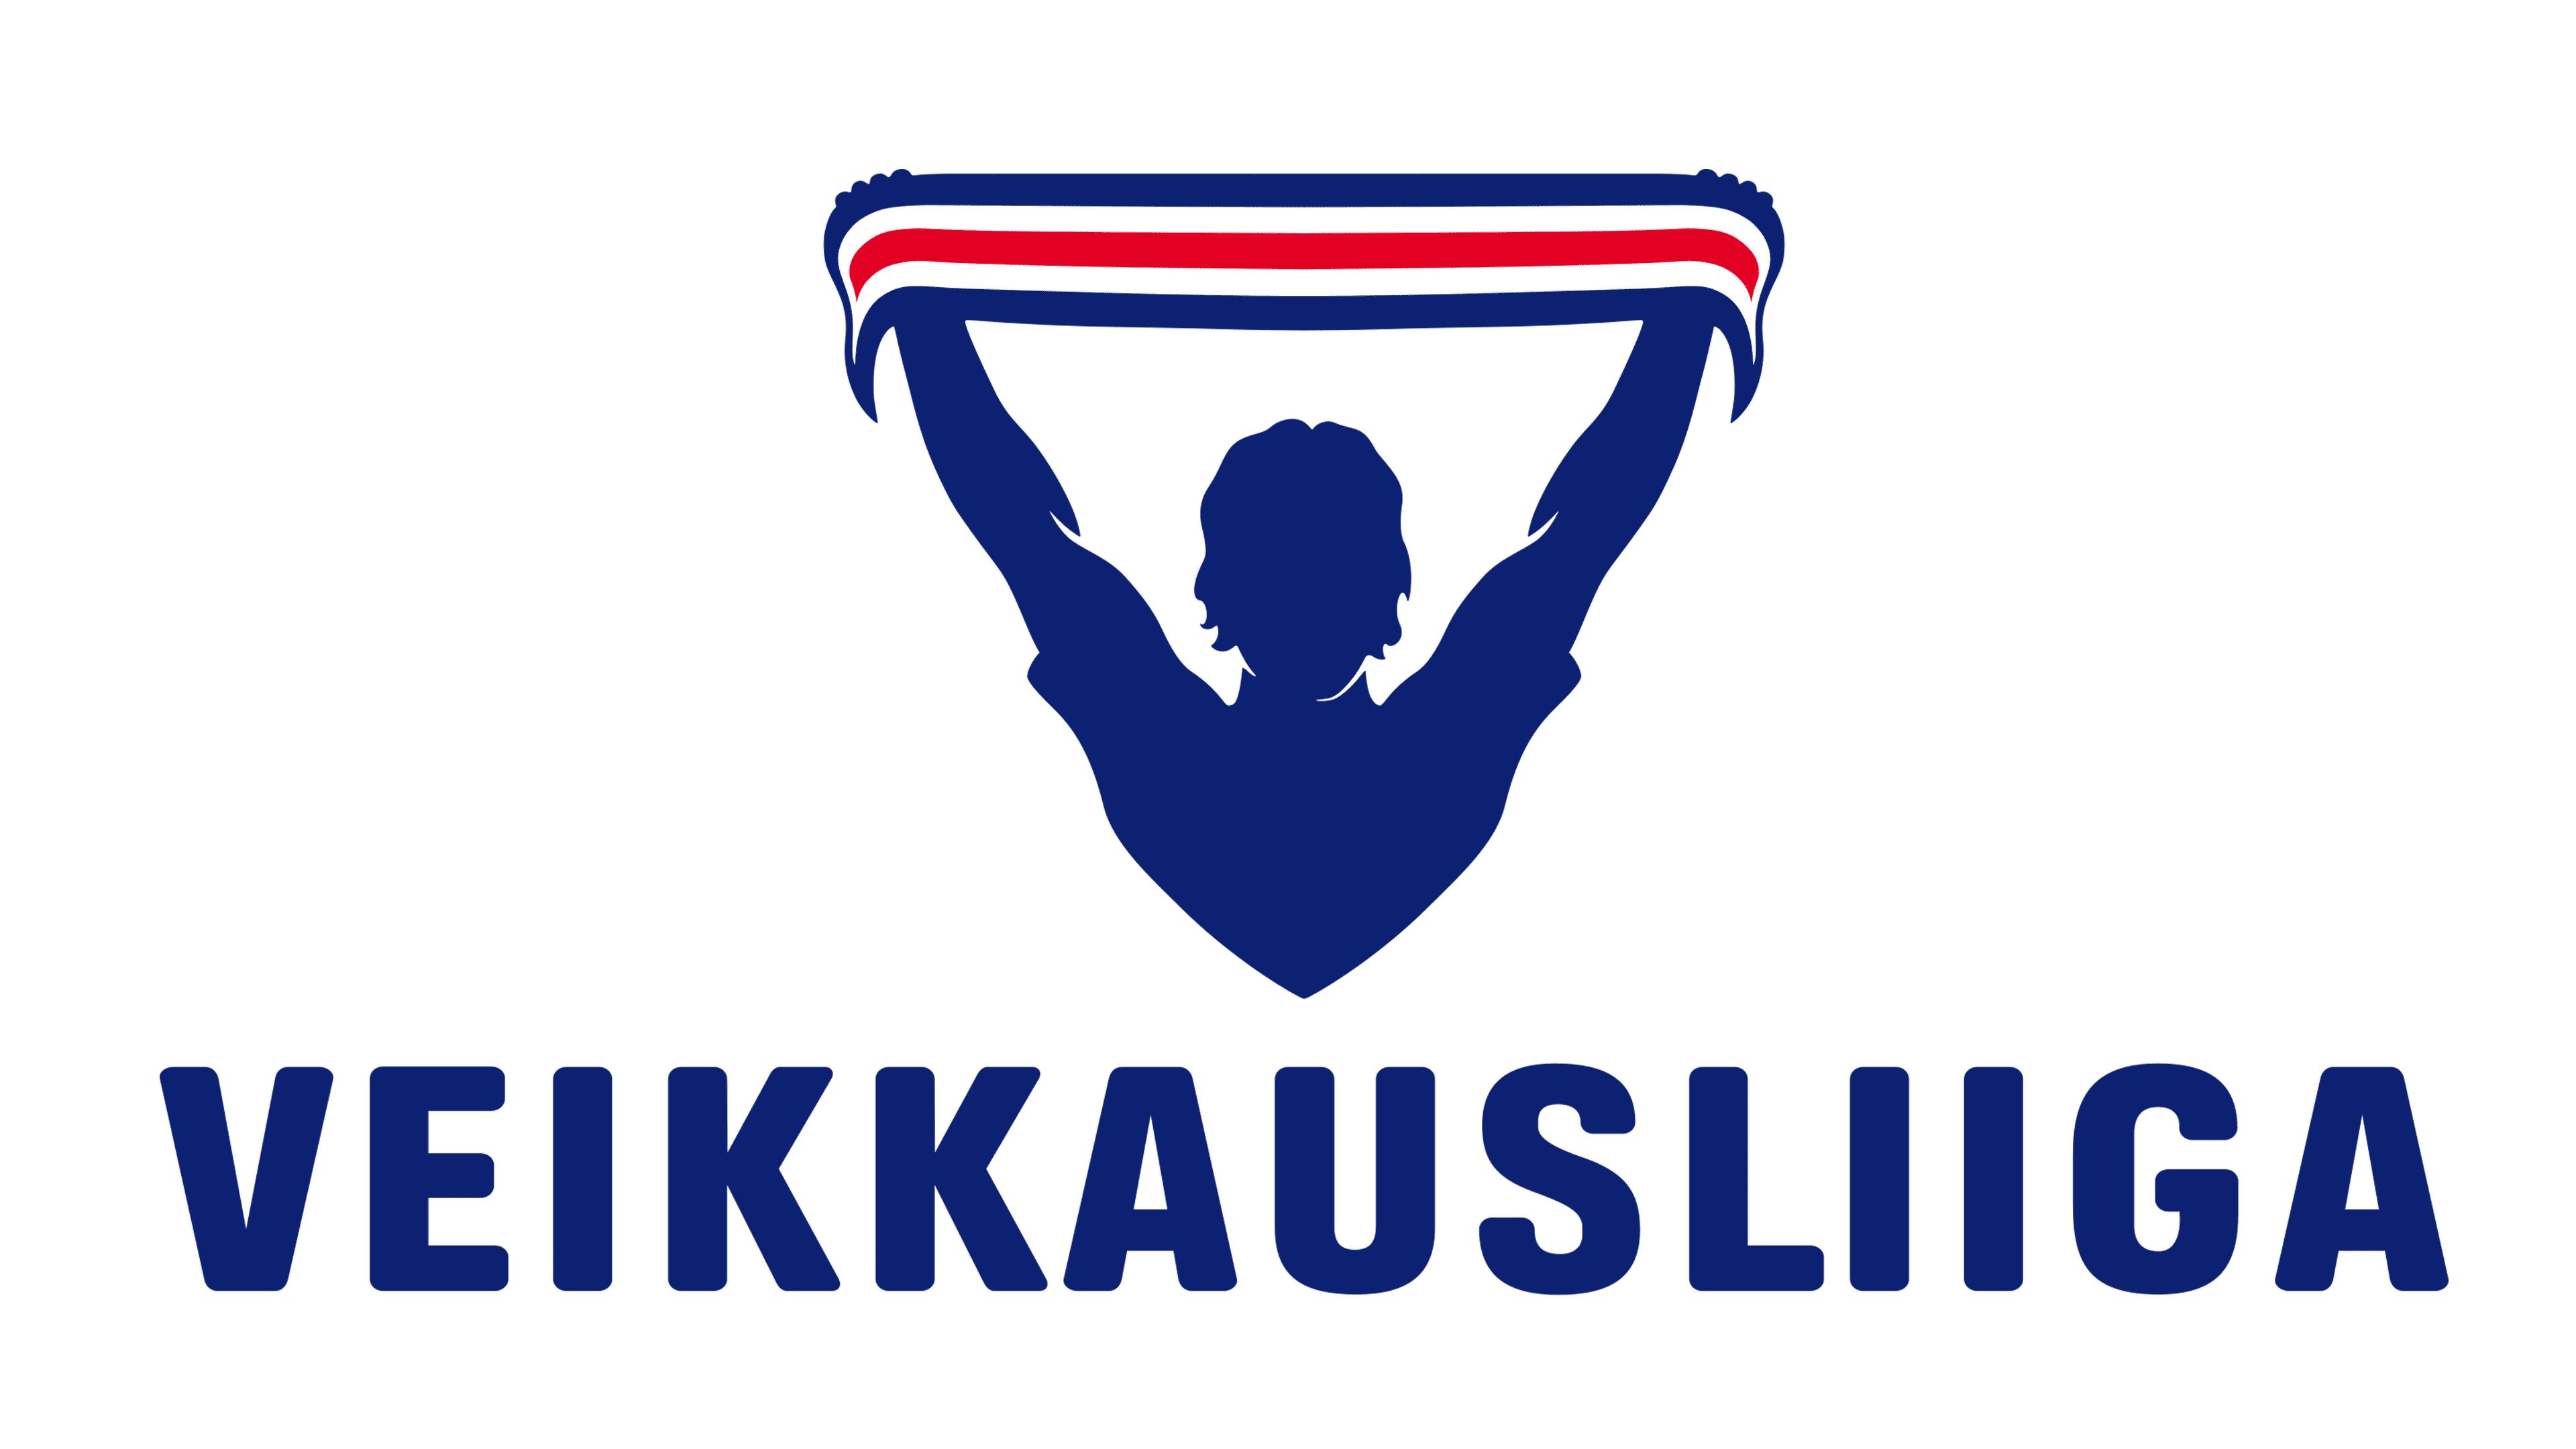 Veikkausliiga (Finland) logo and symbol, meaning, history, PNG, brand